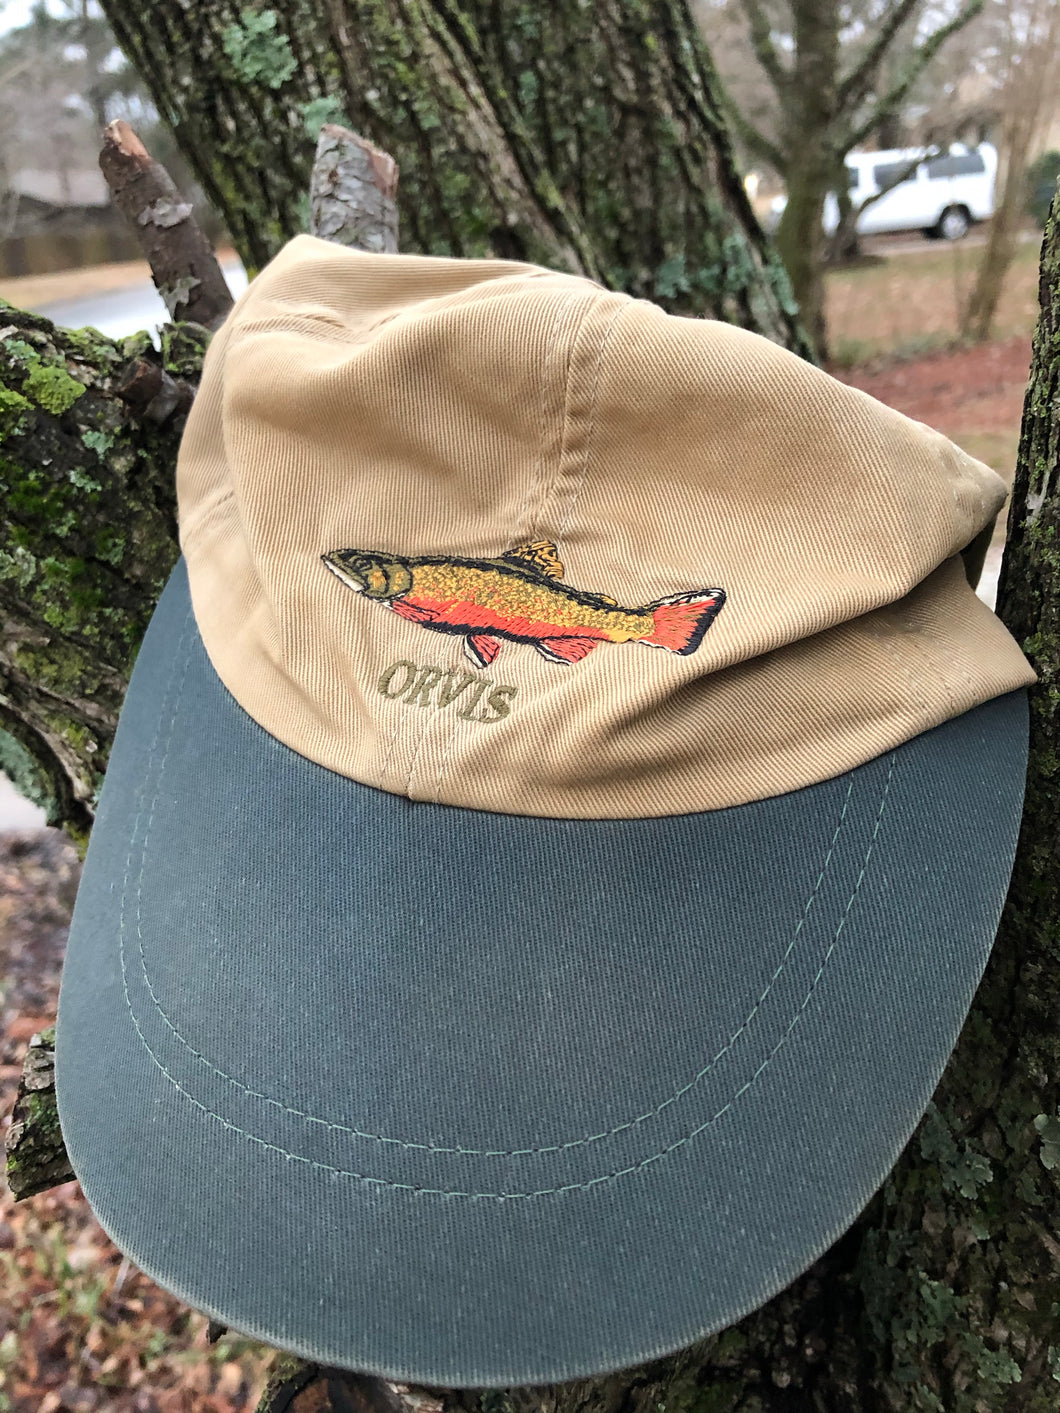 Orvis Trout Hat